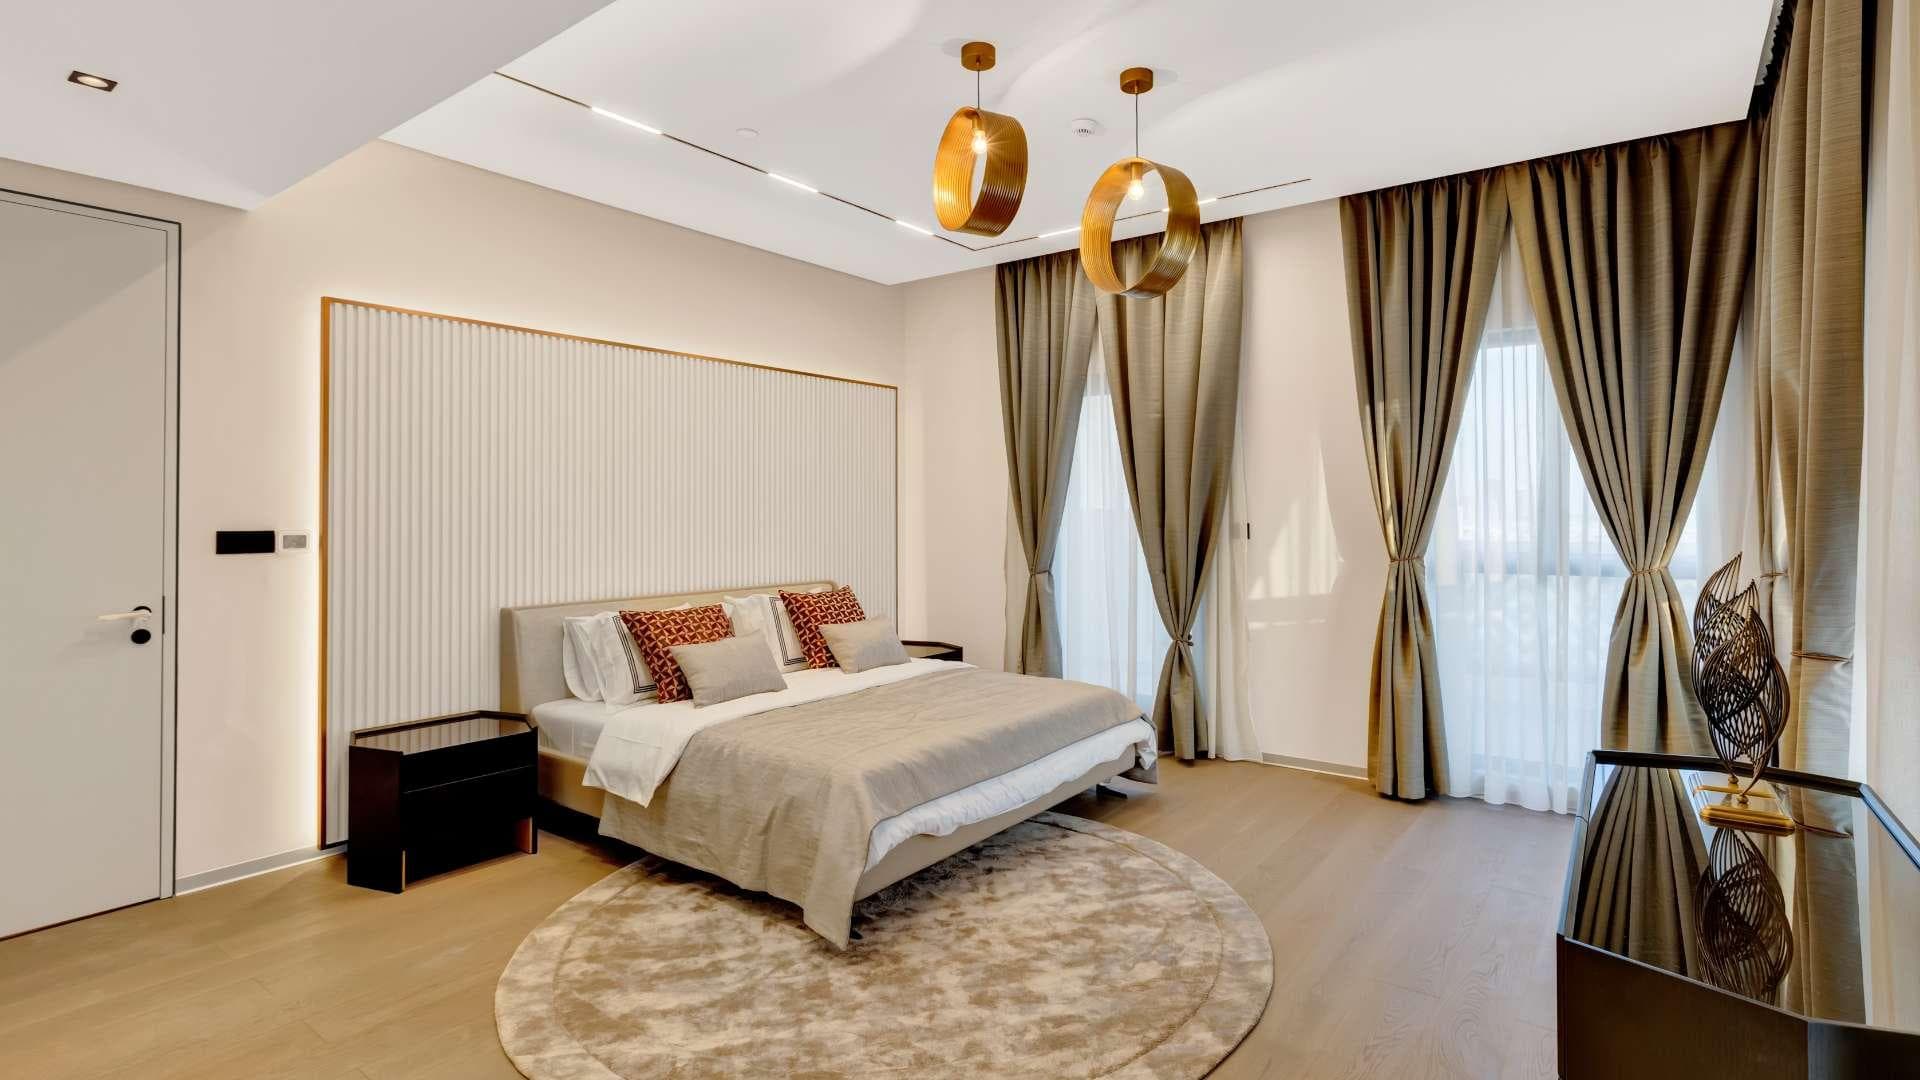 6 Bedroom Penthouse For Sale Kingdom Of Sheba Lp37220 2568ef8a6e4f4400.jpg